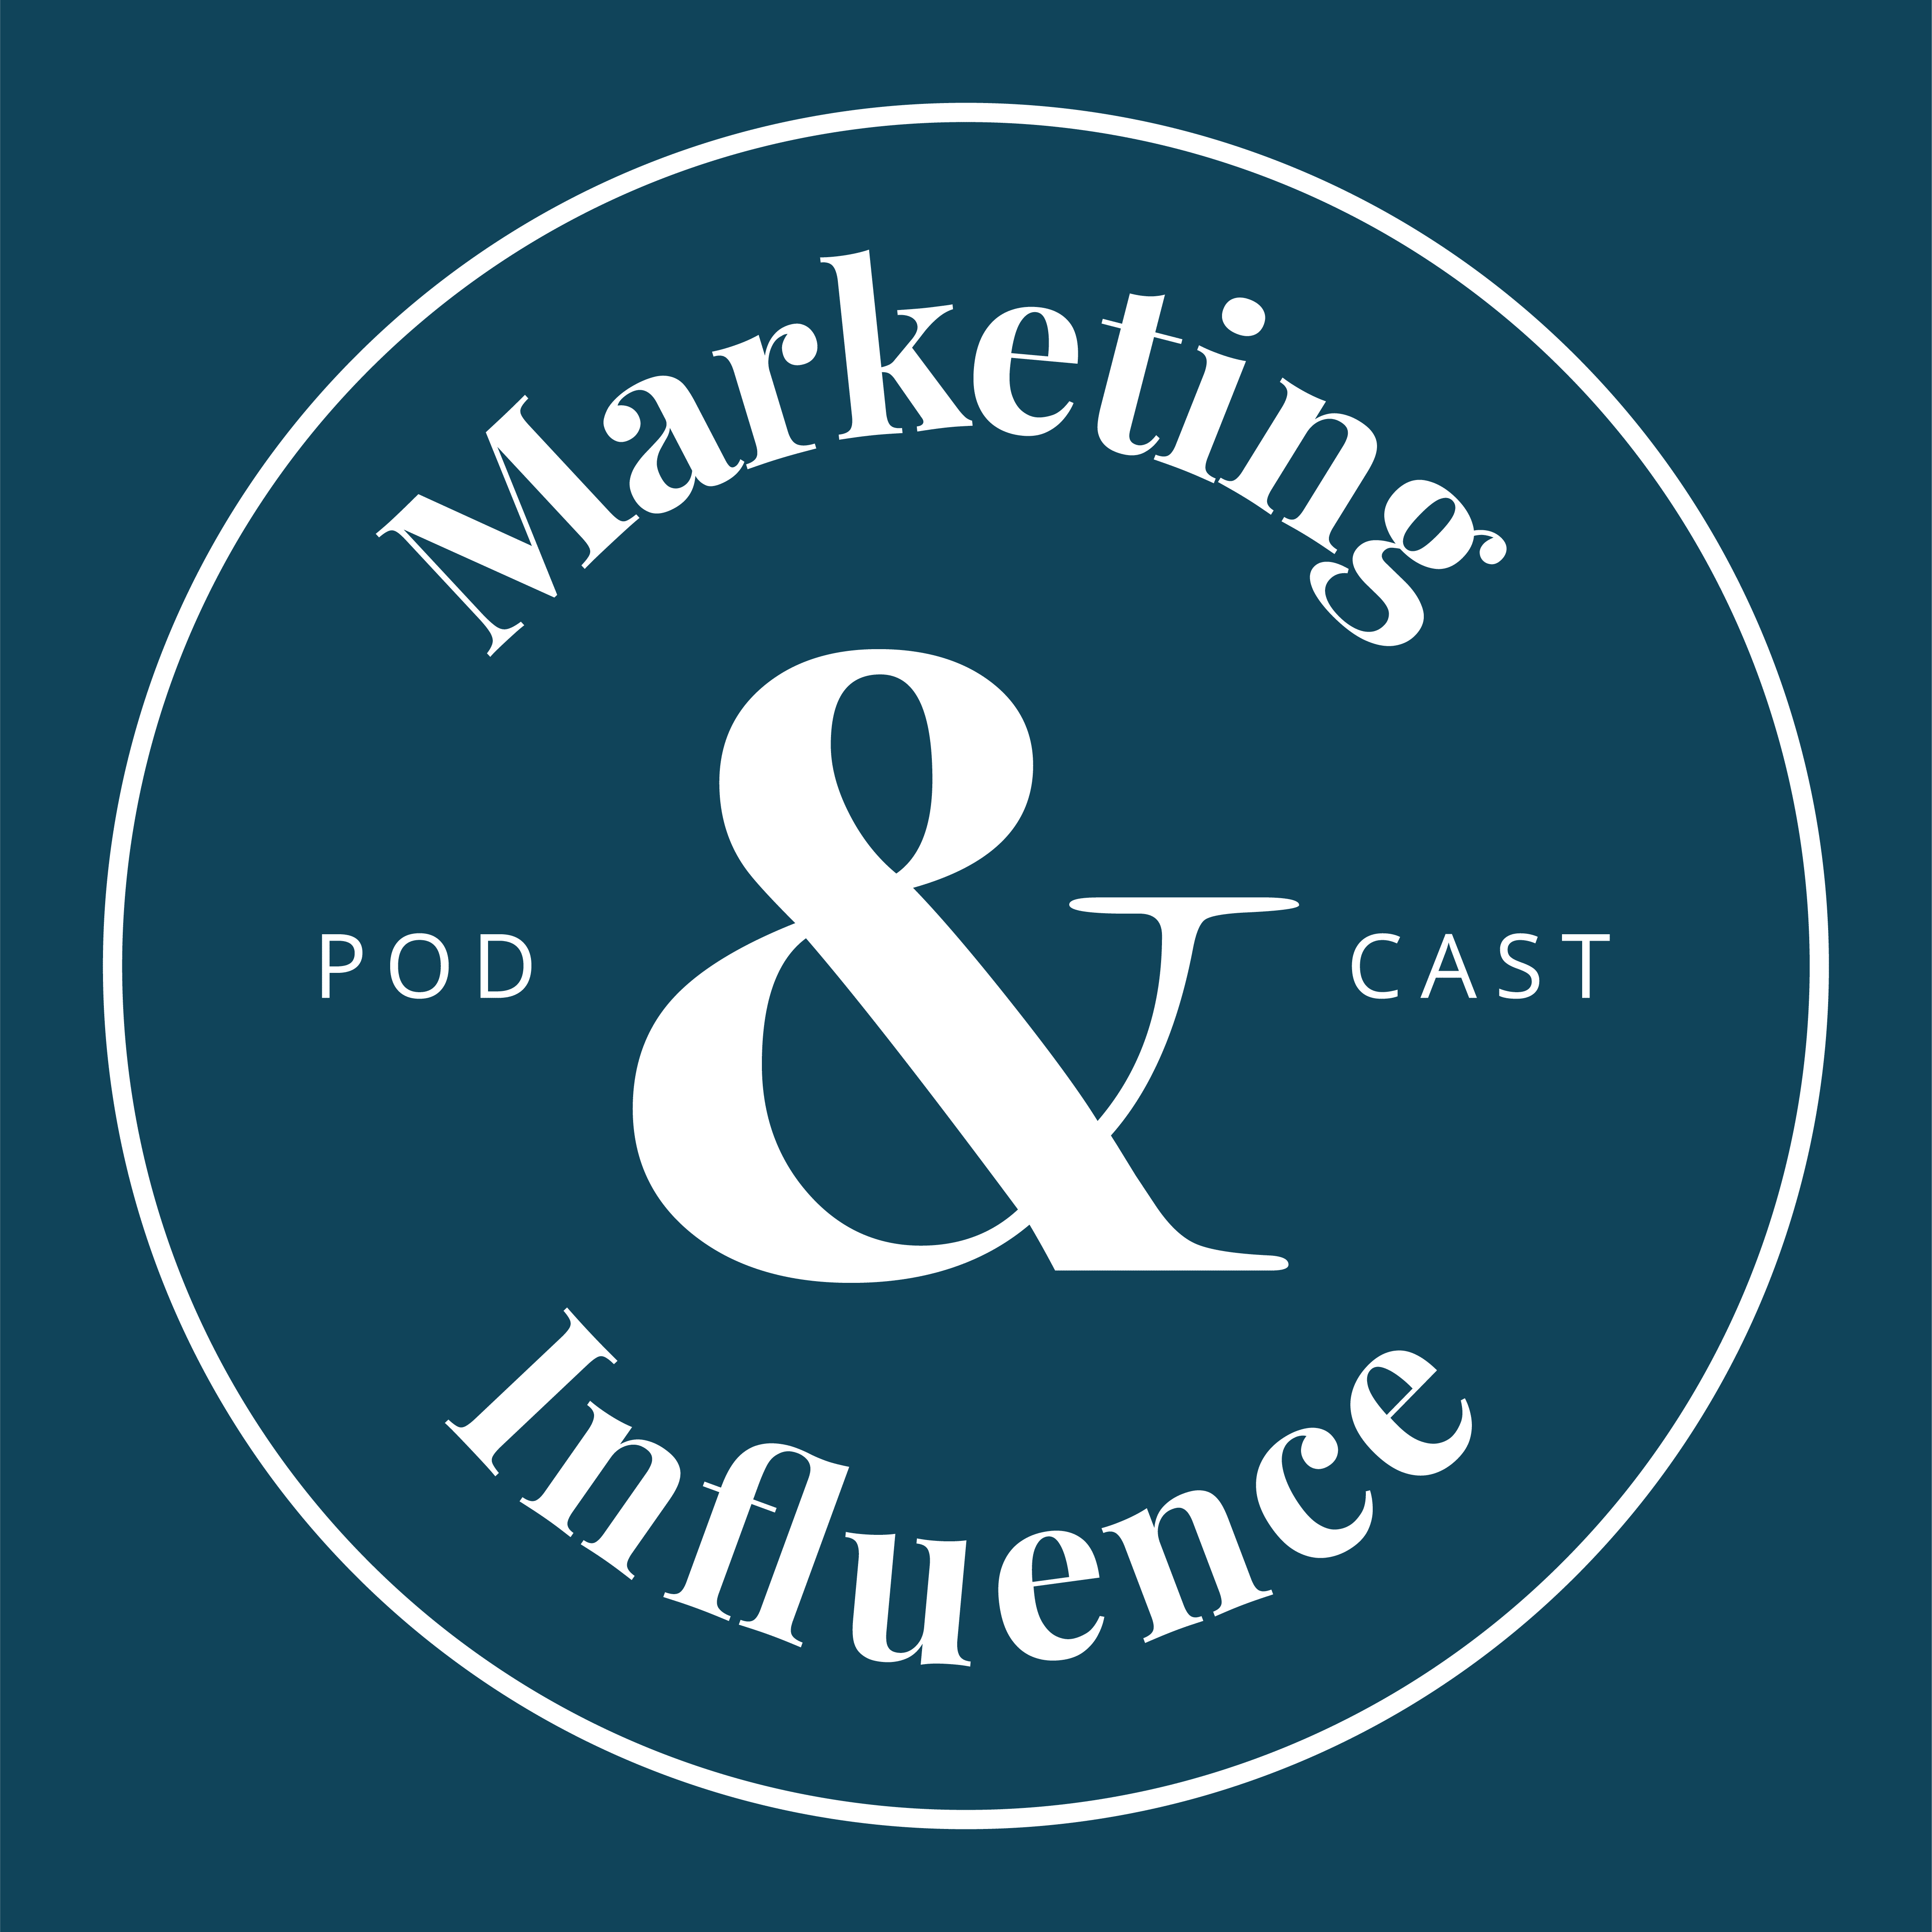 Podcast marketing influence